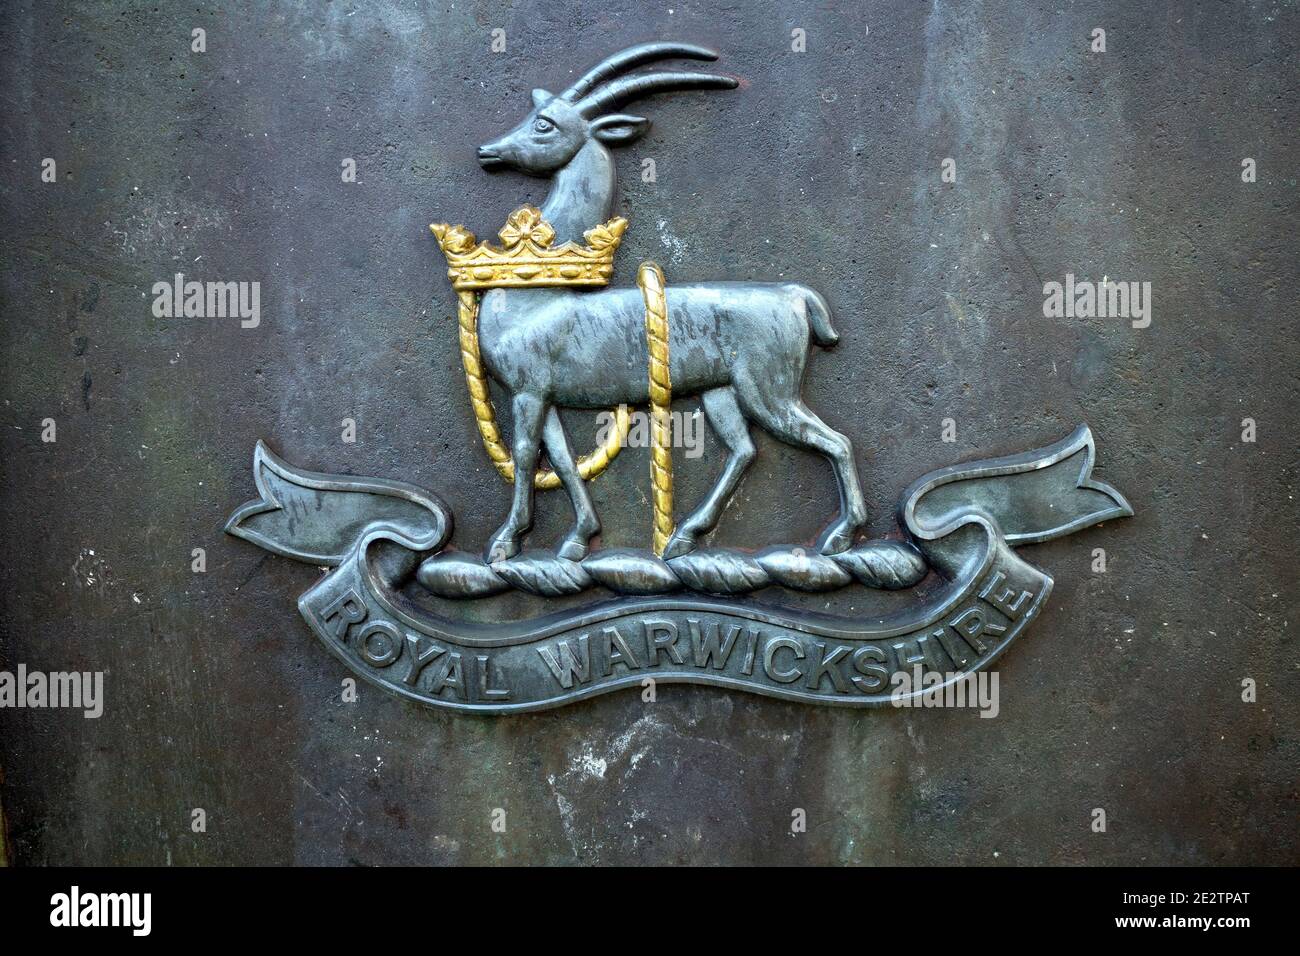 Royal Warwickshire regimental crest on a memorial, Hampton Magna, Warwickshire, England, UK Stock Photo